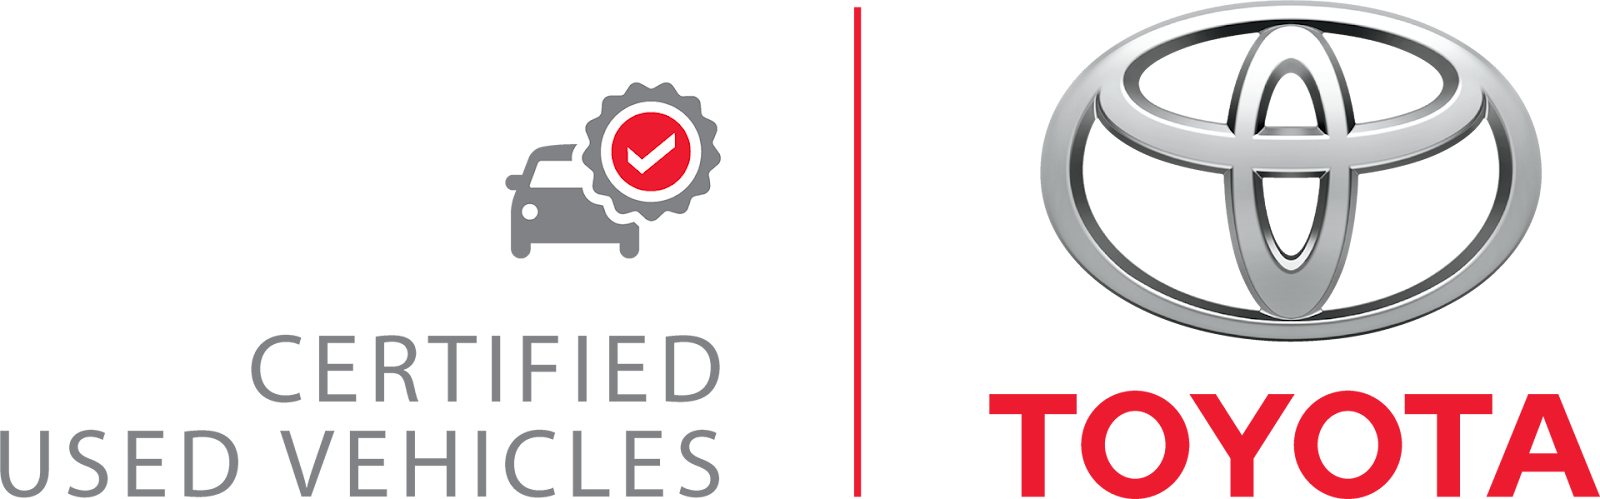 Toyota Certified Used Vehicle logo